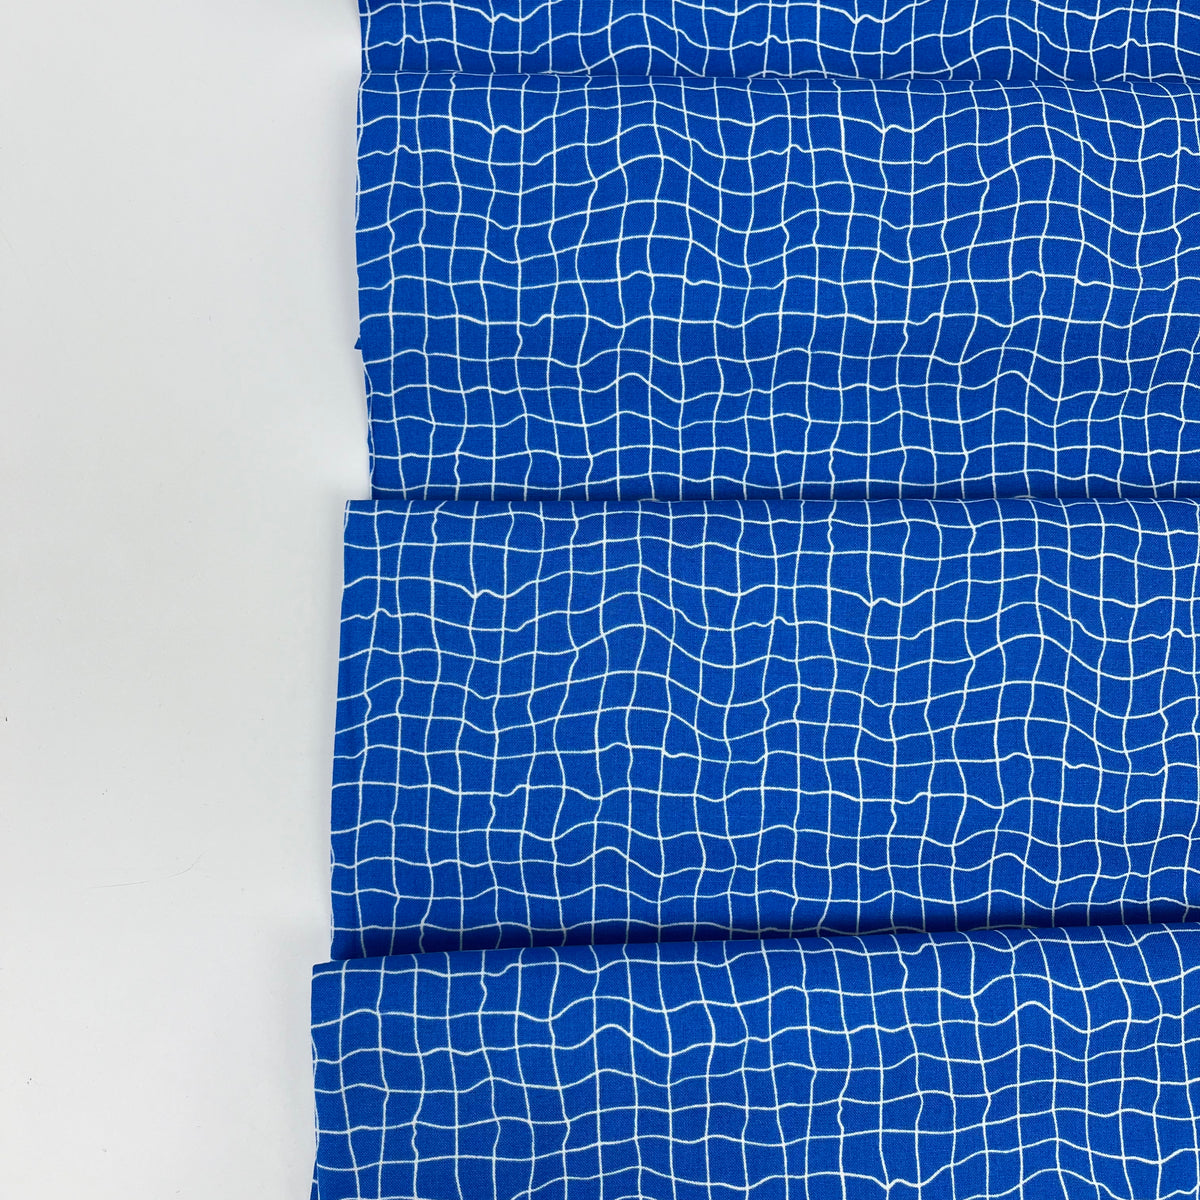 Water // Pool Tiles - Royal Blue // Ruby Star Society